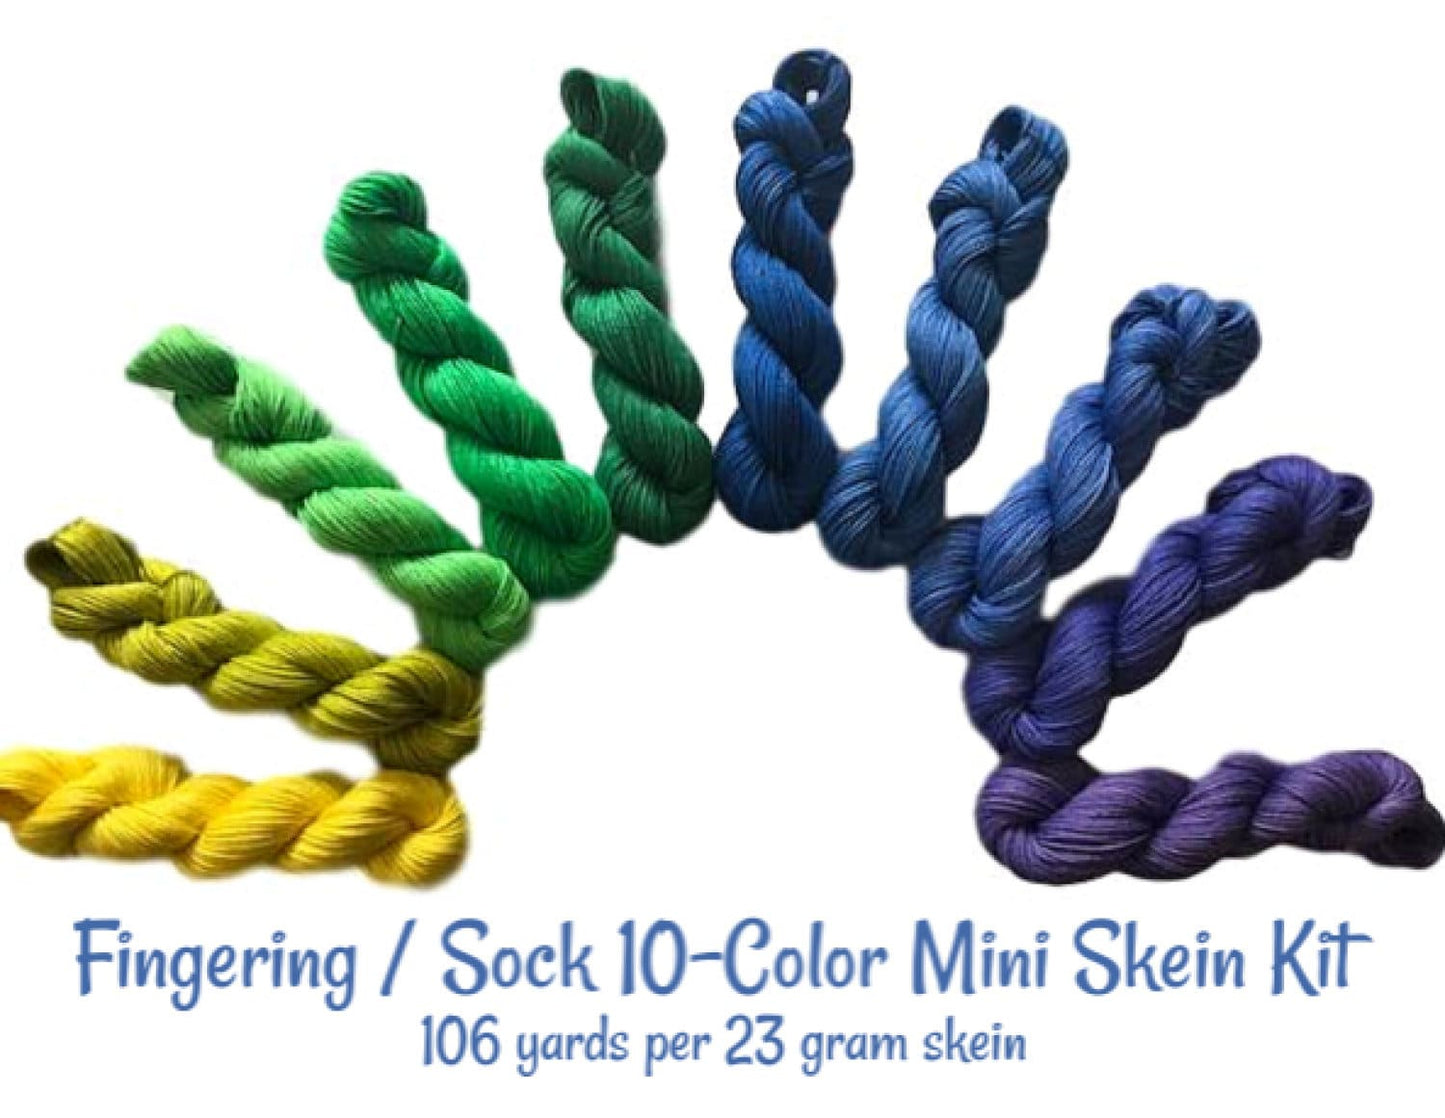 Vegan Gradient Yarn Kit - Hand Dyed Fingering / Sock Weight Mini Skeins - 10 Semi Solids / Tonals - Bamboo Cotton Artisan 3 Ply Thread Kit